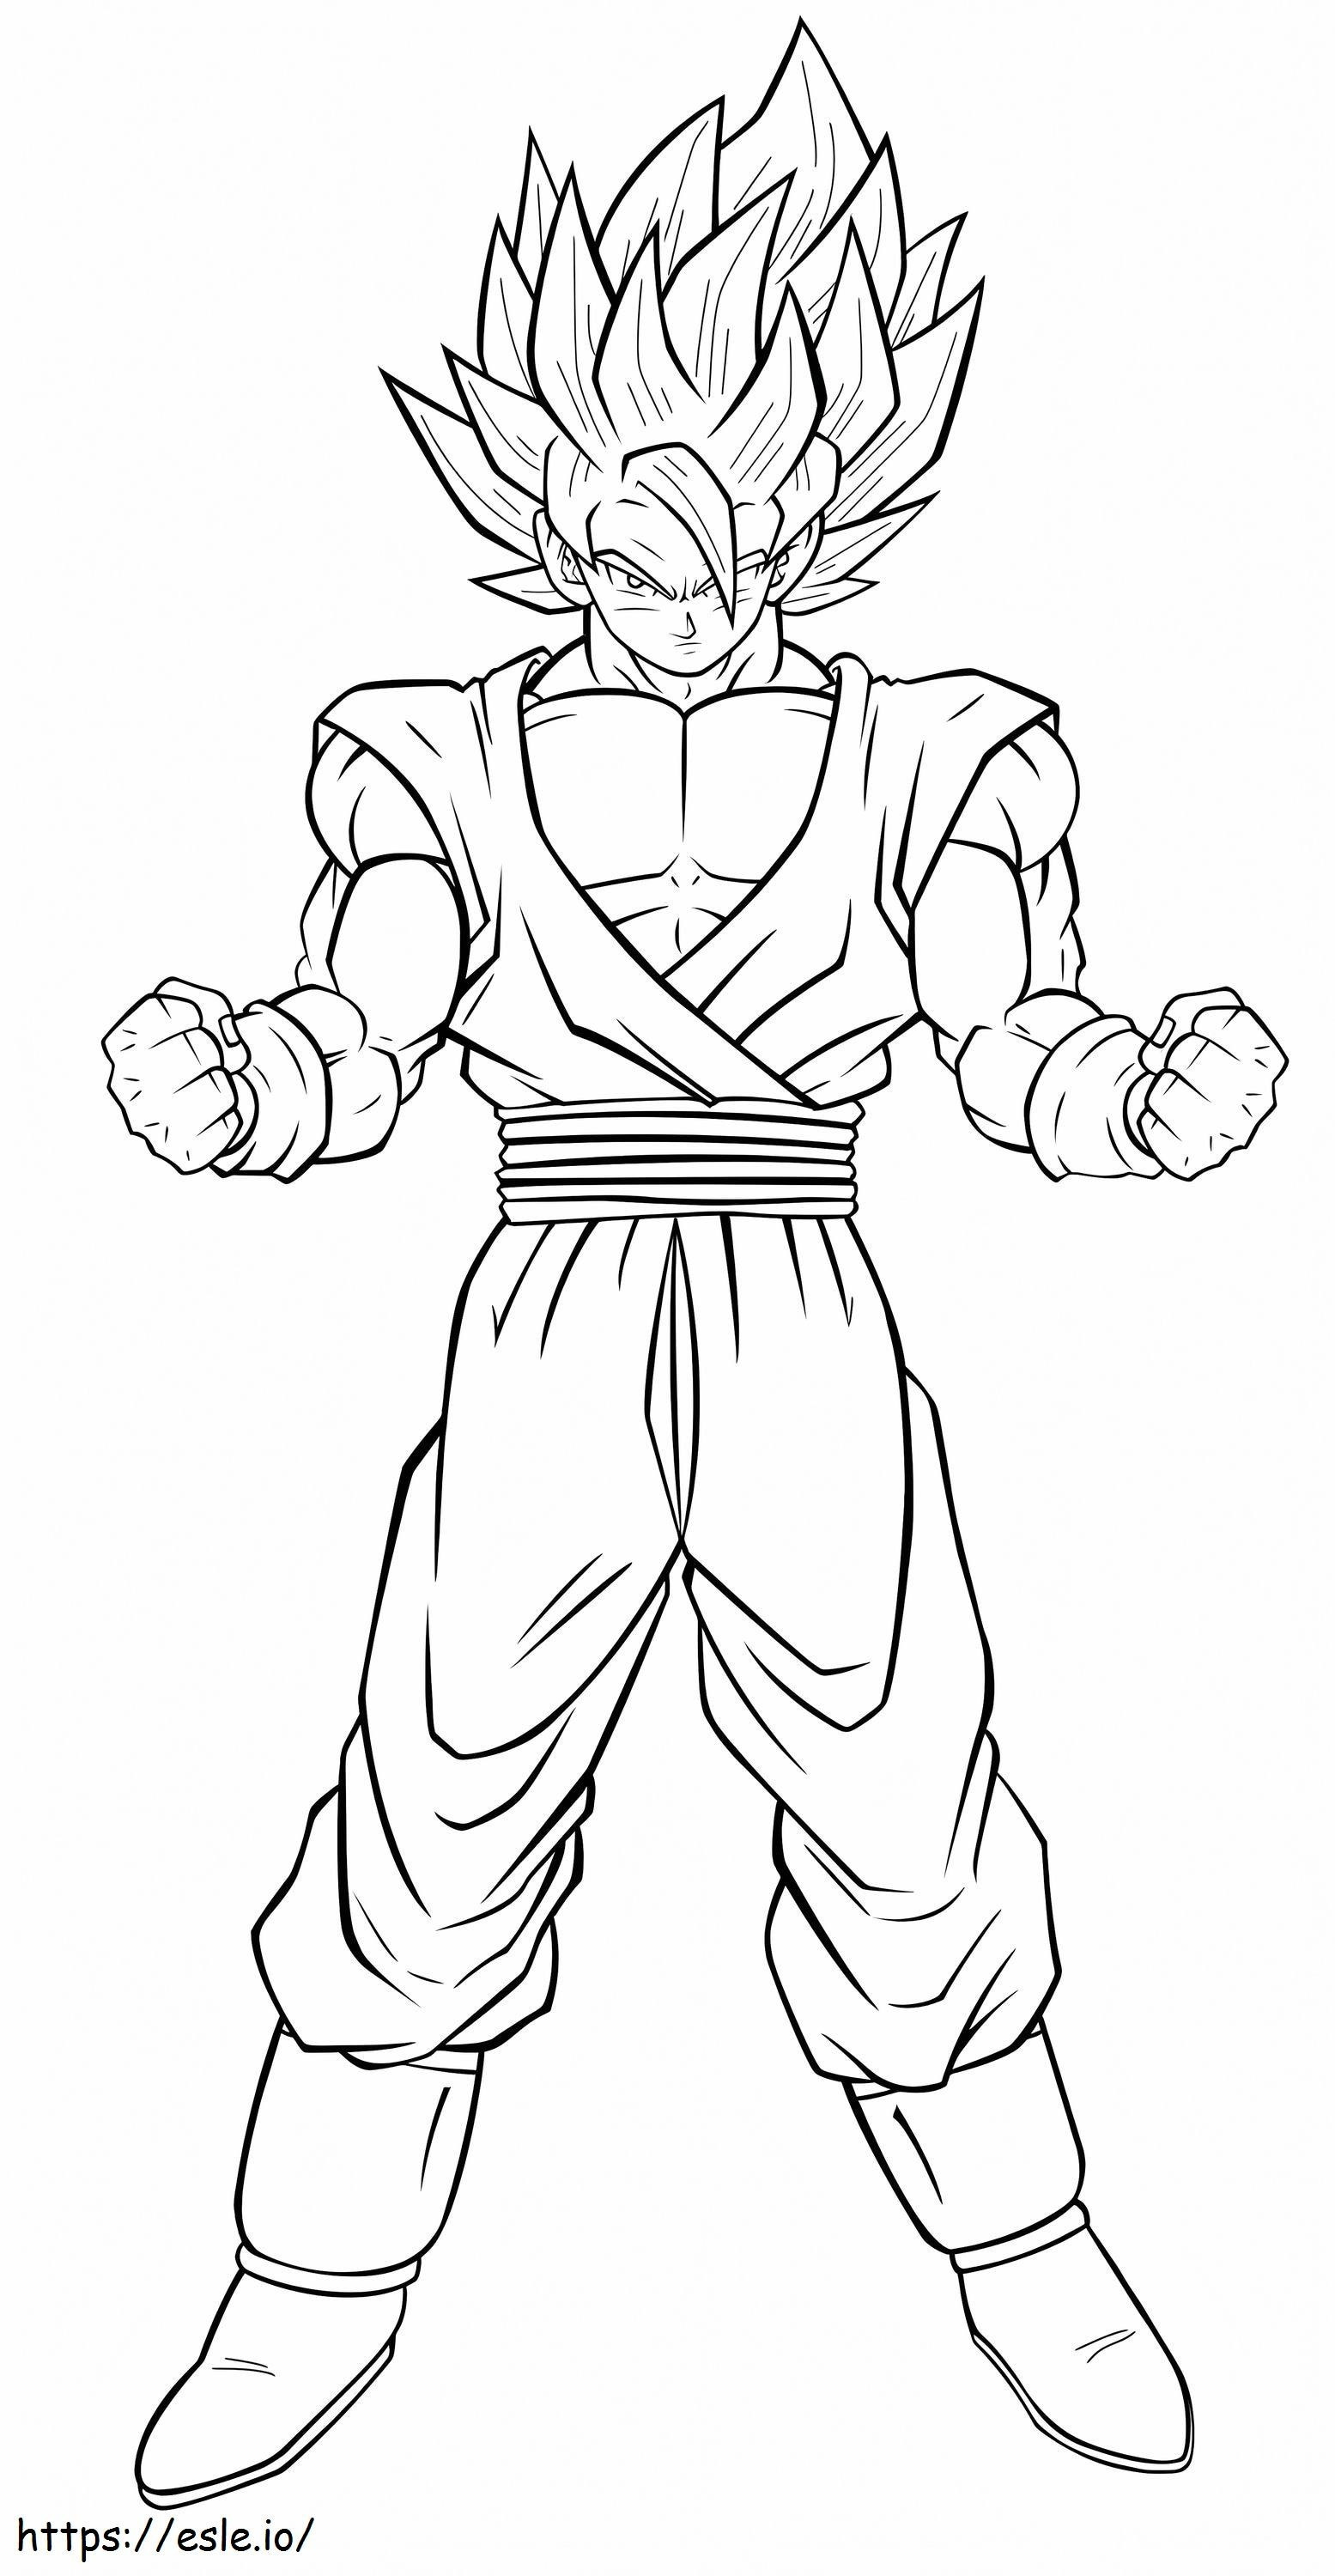 Goku Ssj2 De Pie coloring page